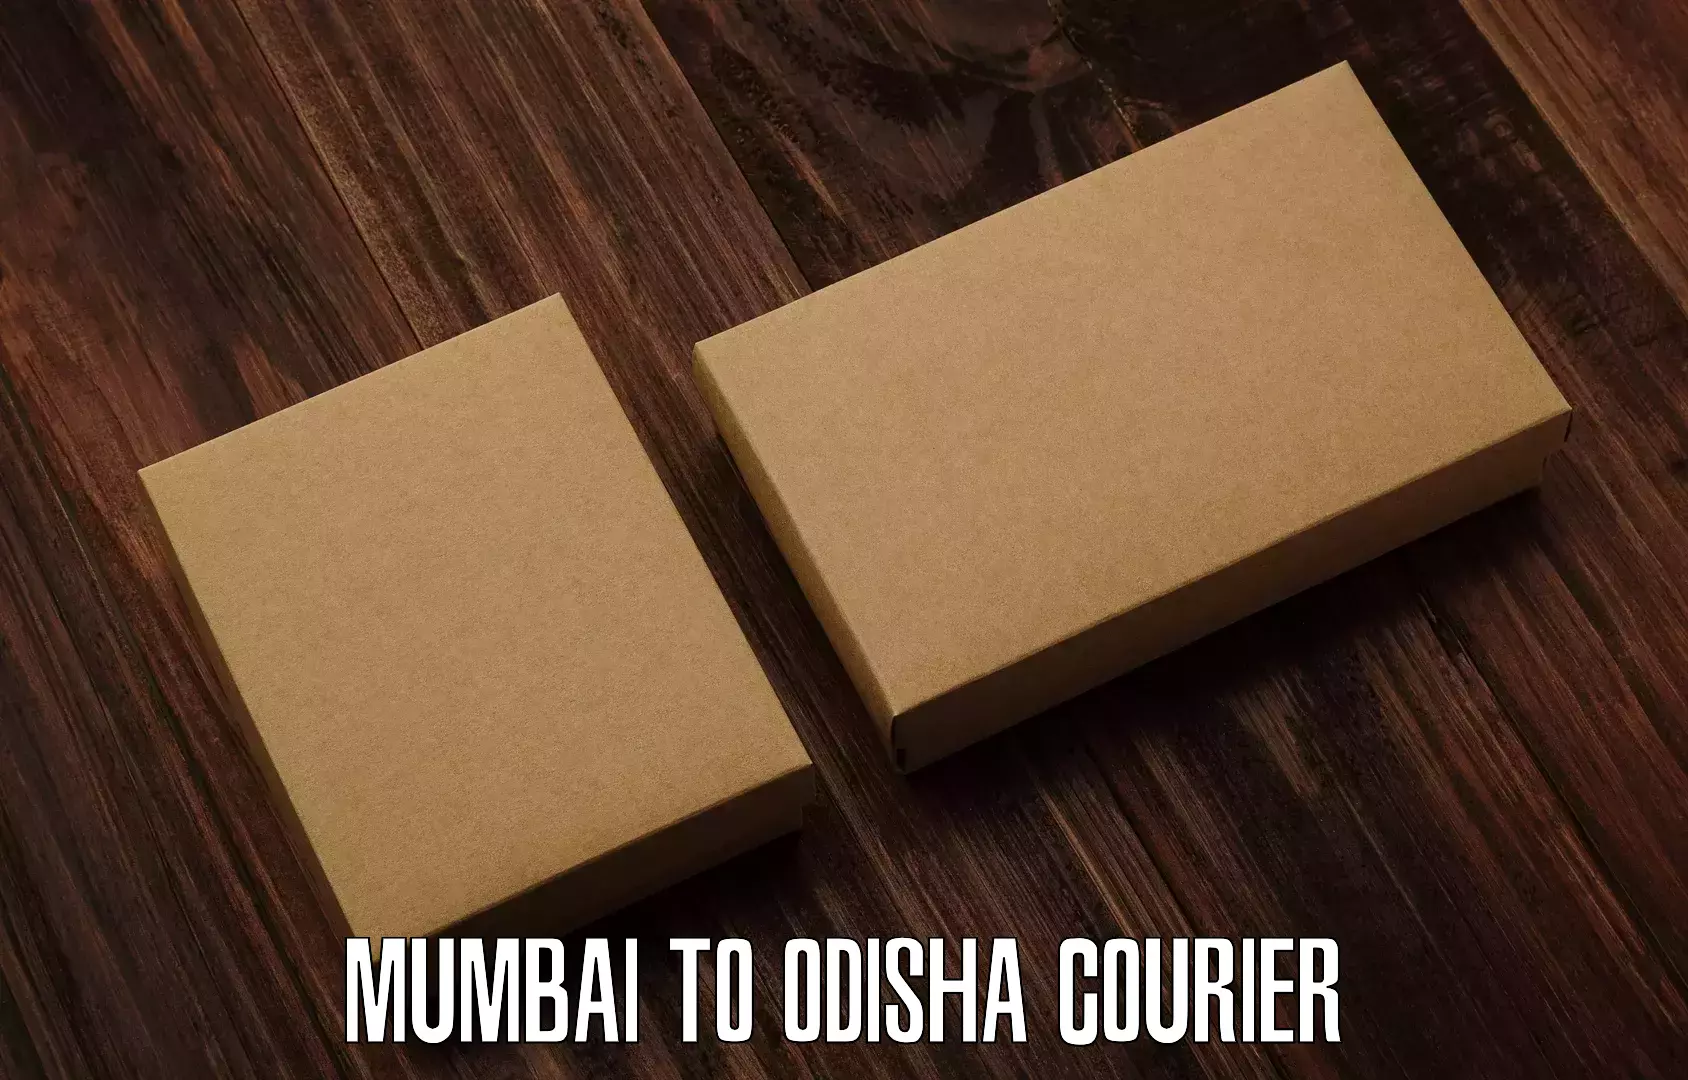 Courier membership in Mumbai to Basta